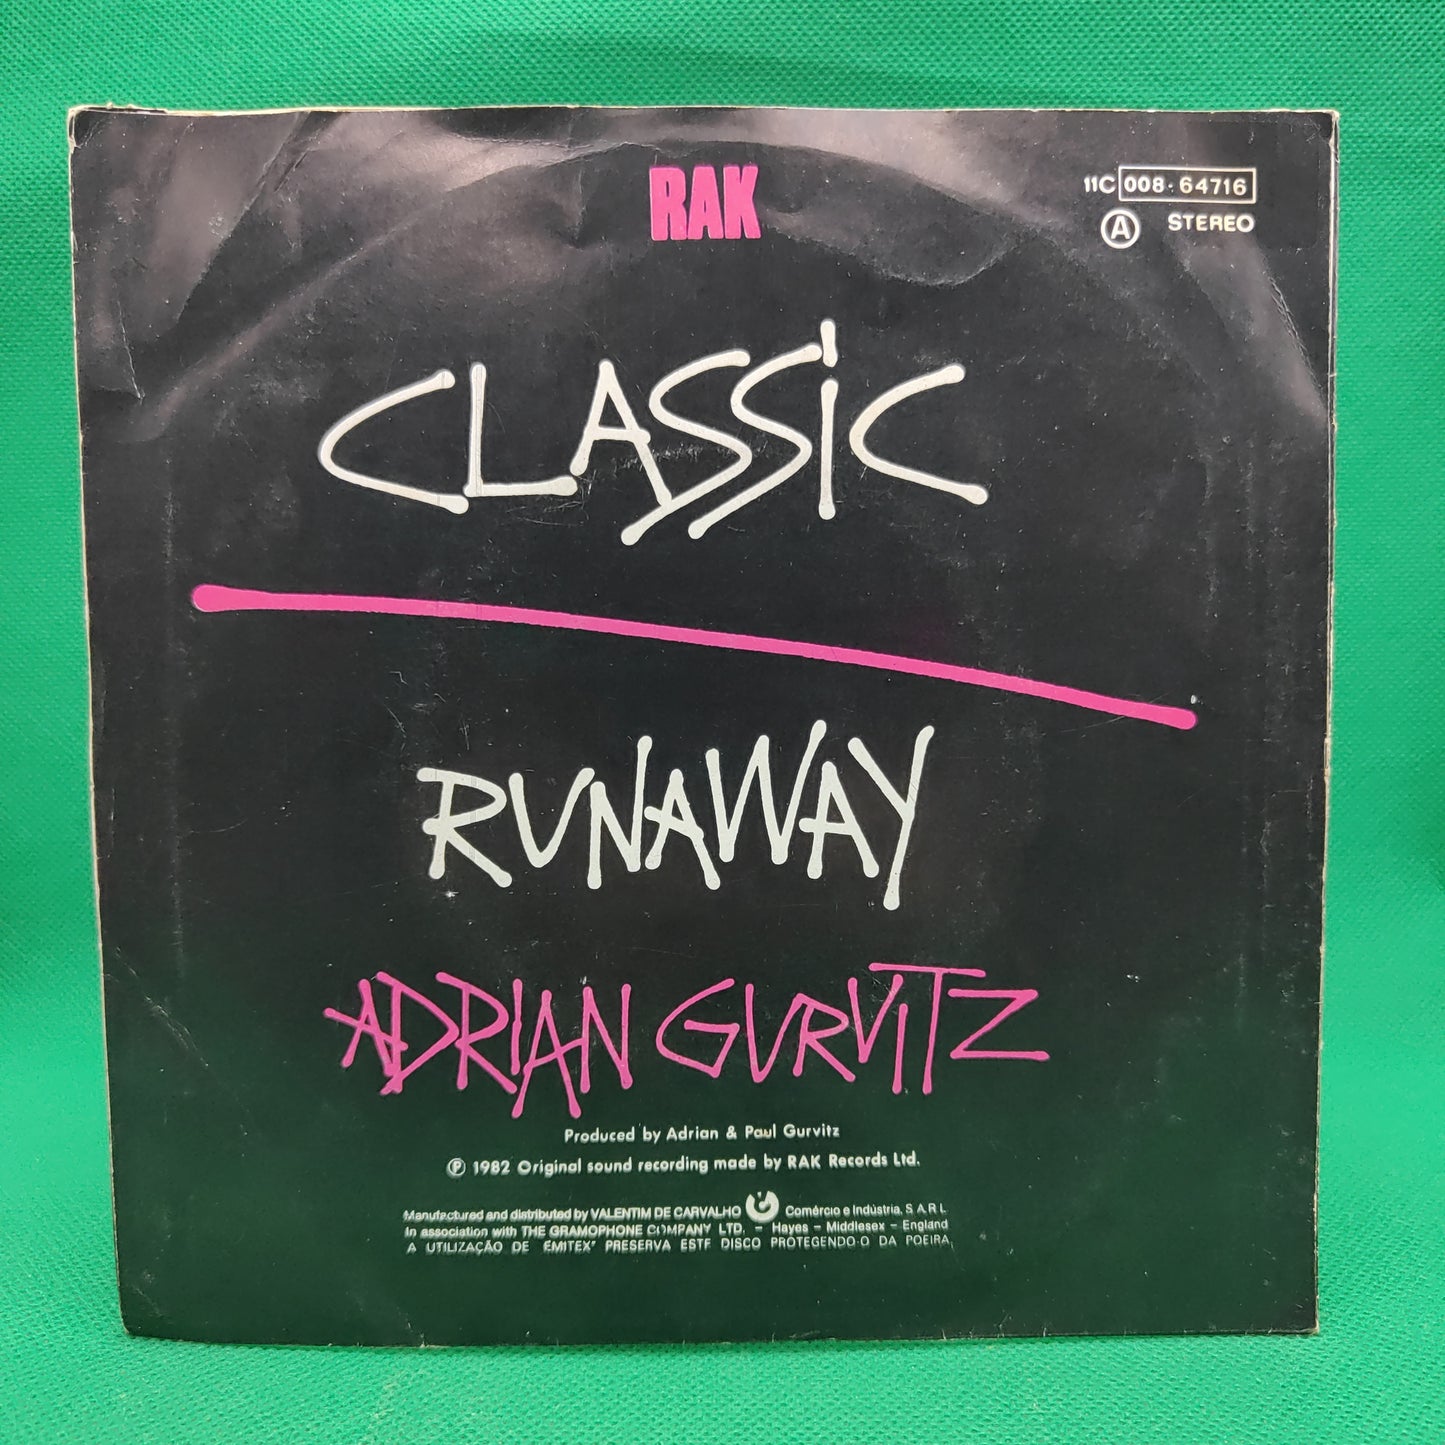 Adrian Gurvitz – Classic